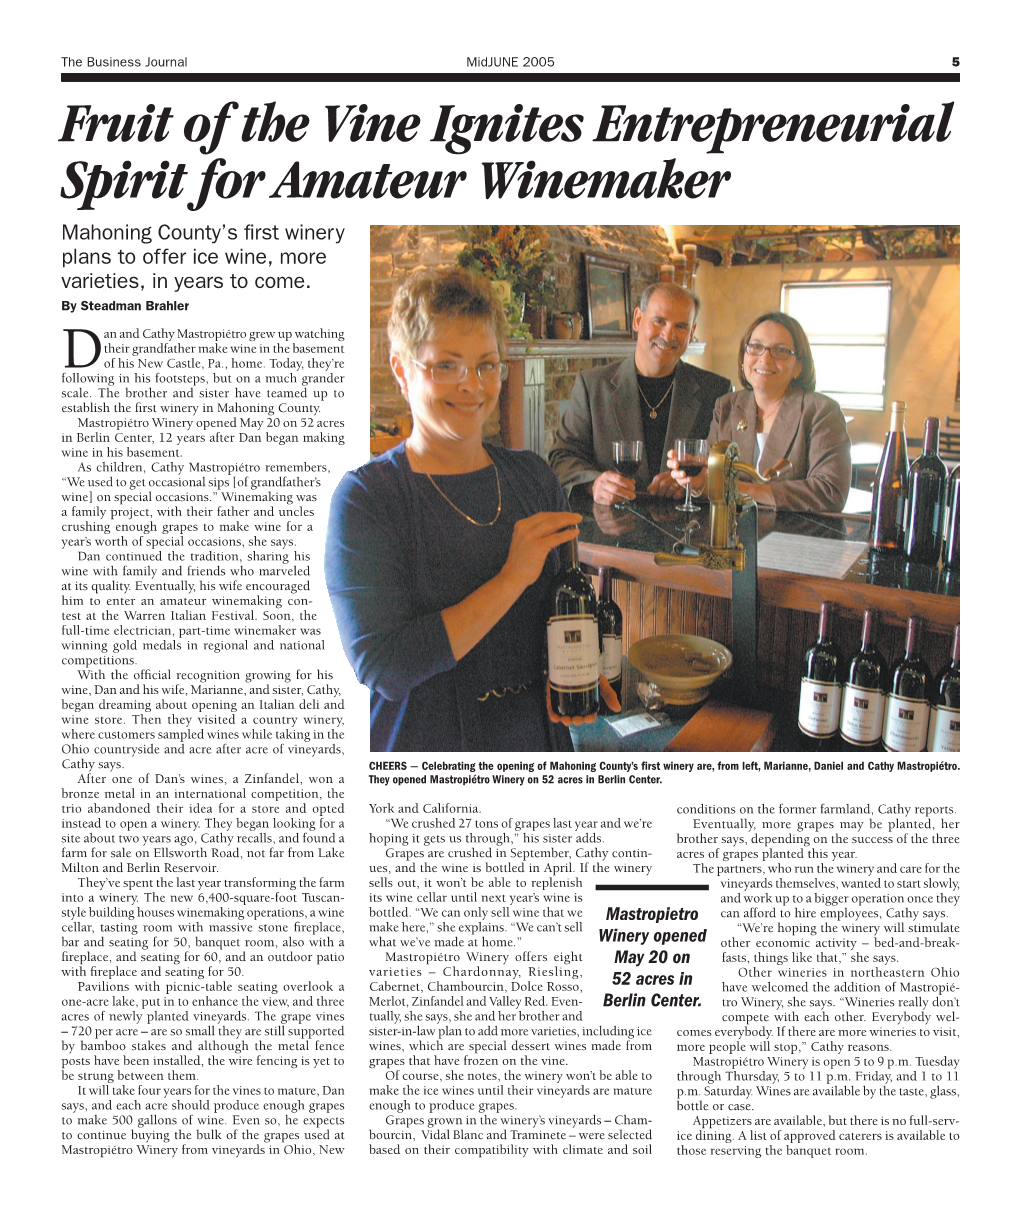 Mastropietro Winery Business Journal 2005